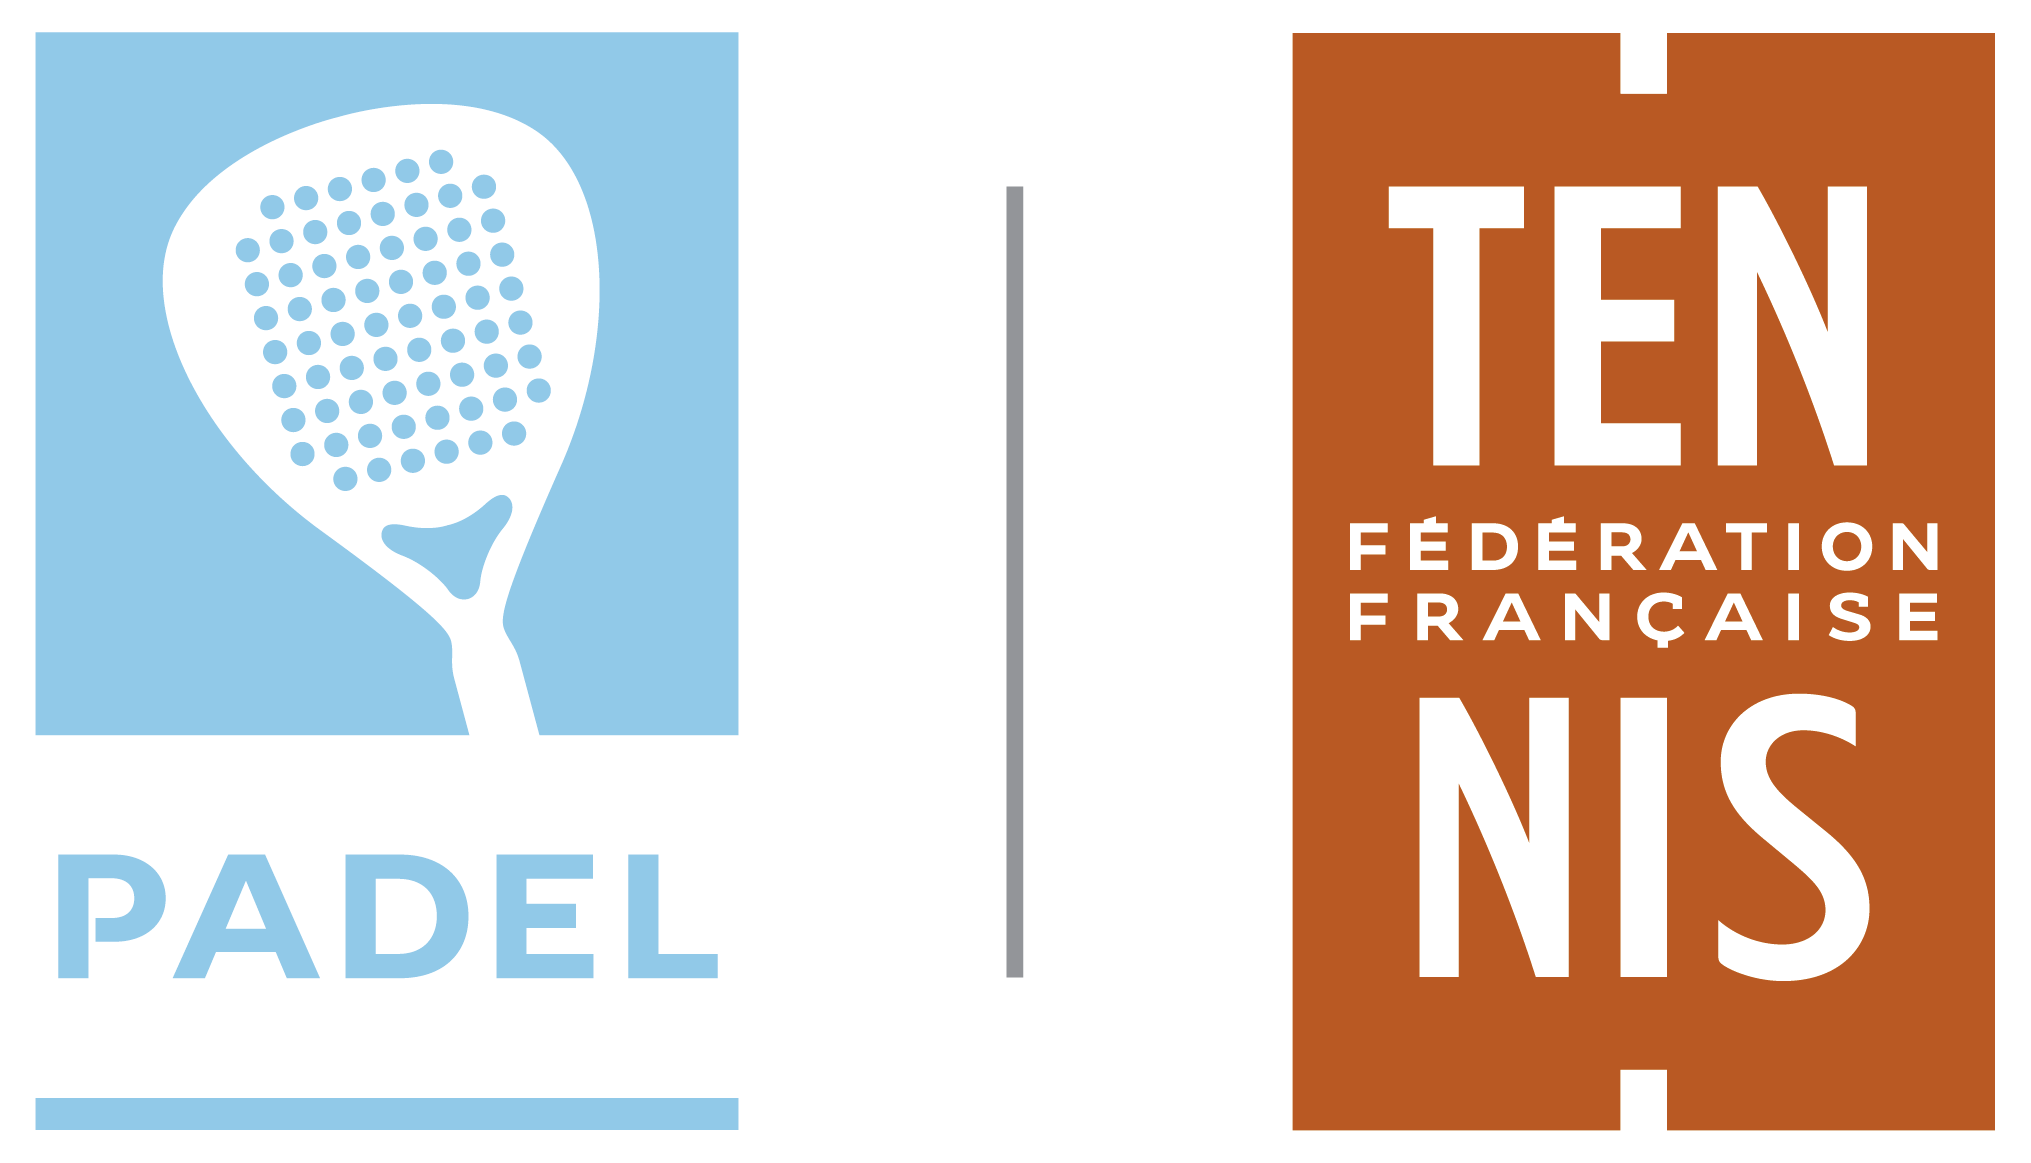 Padel Sviluppo del logo FFT